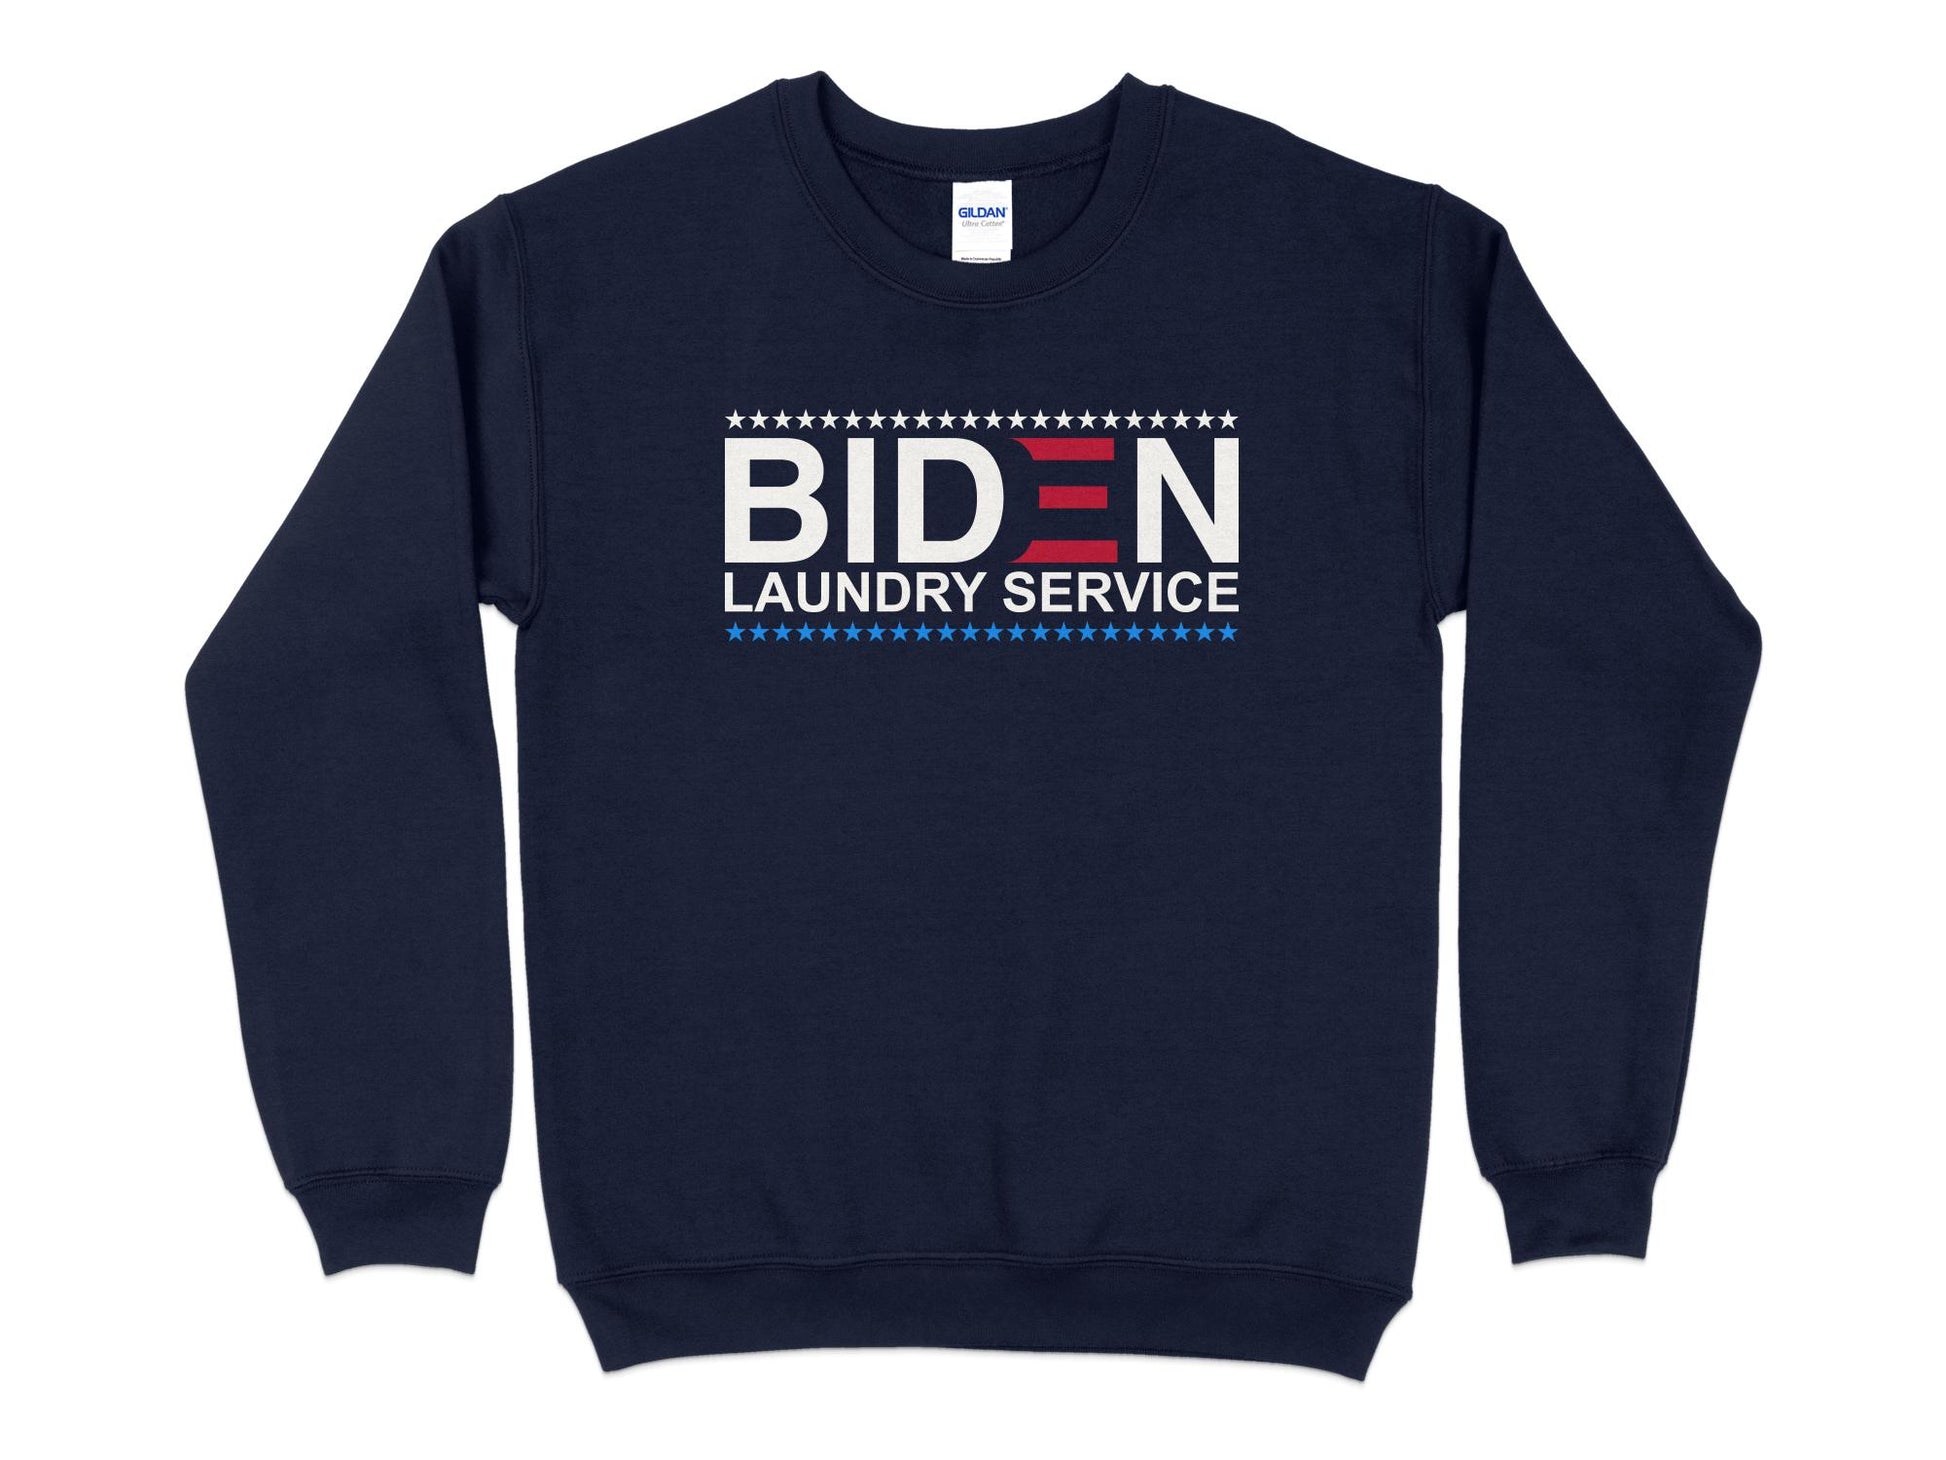 Joe Biden Sweatshirt - Laundry Service, navy blue